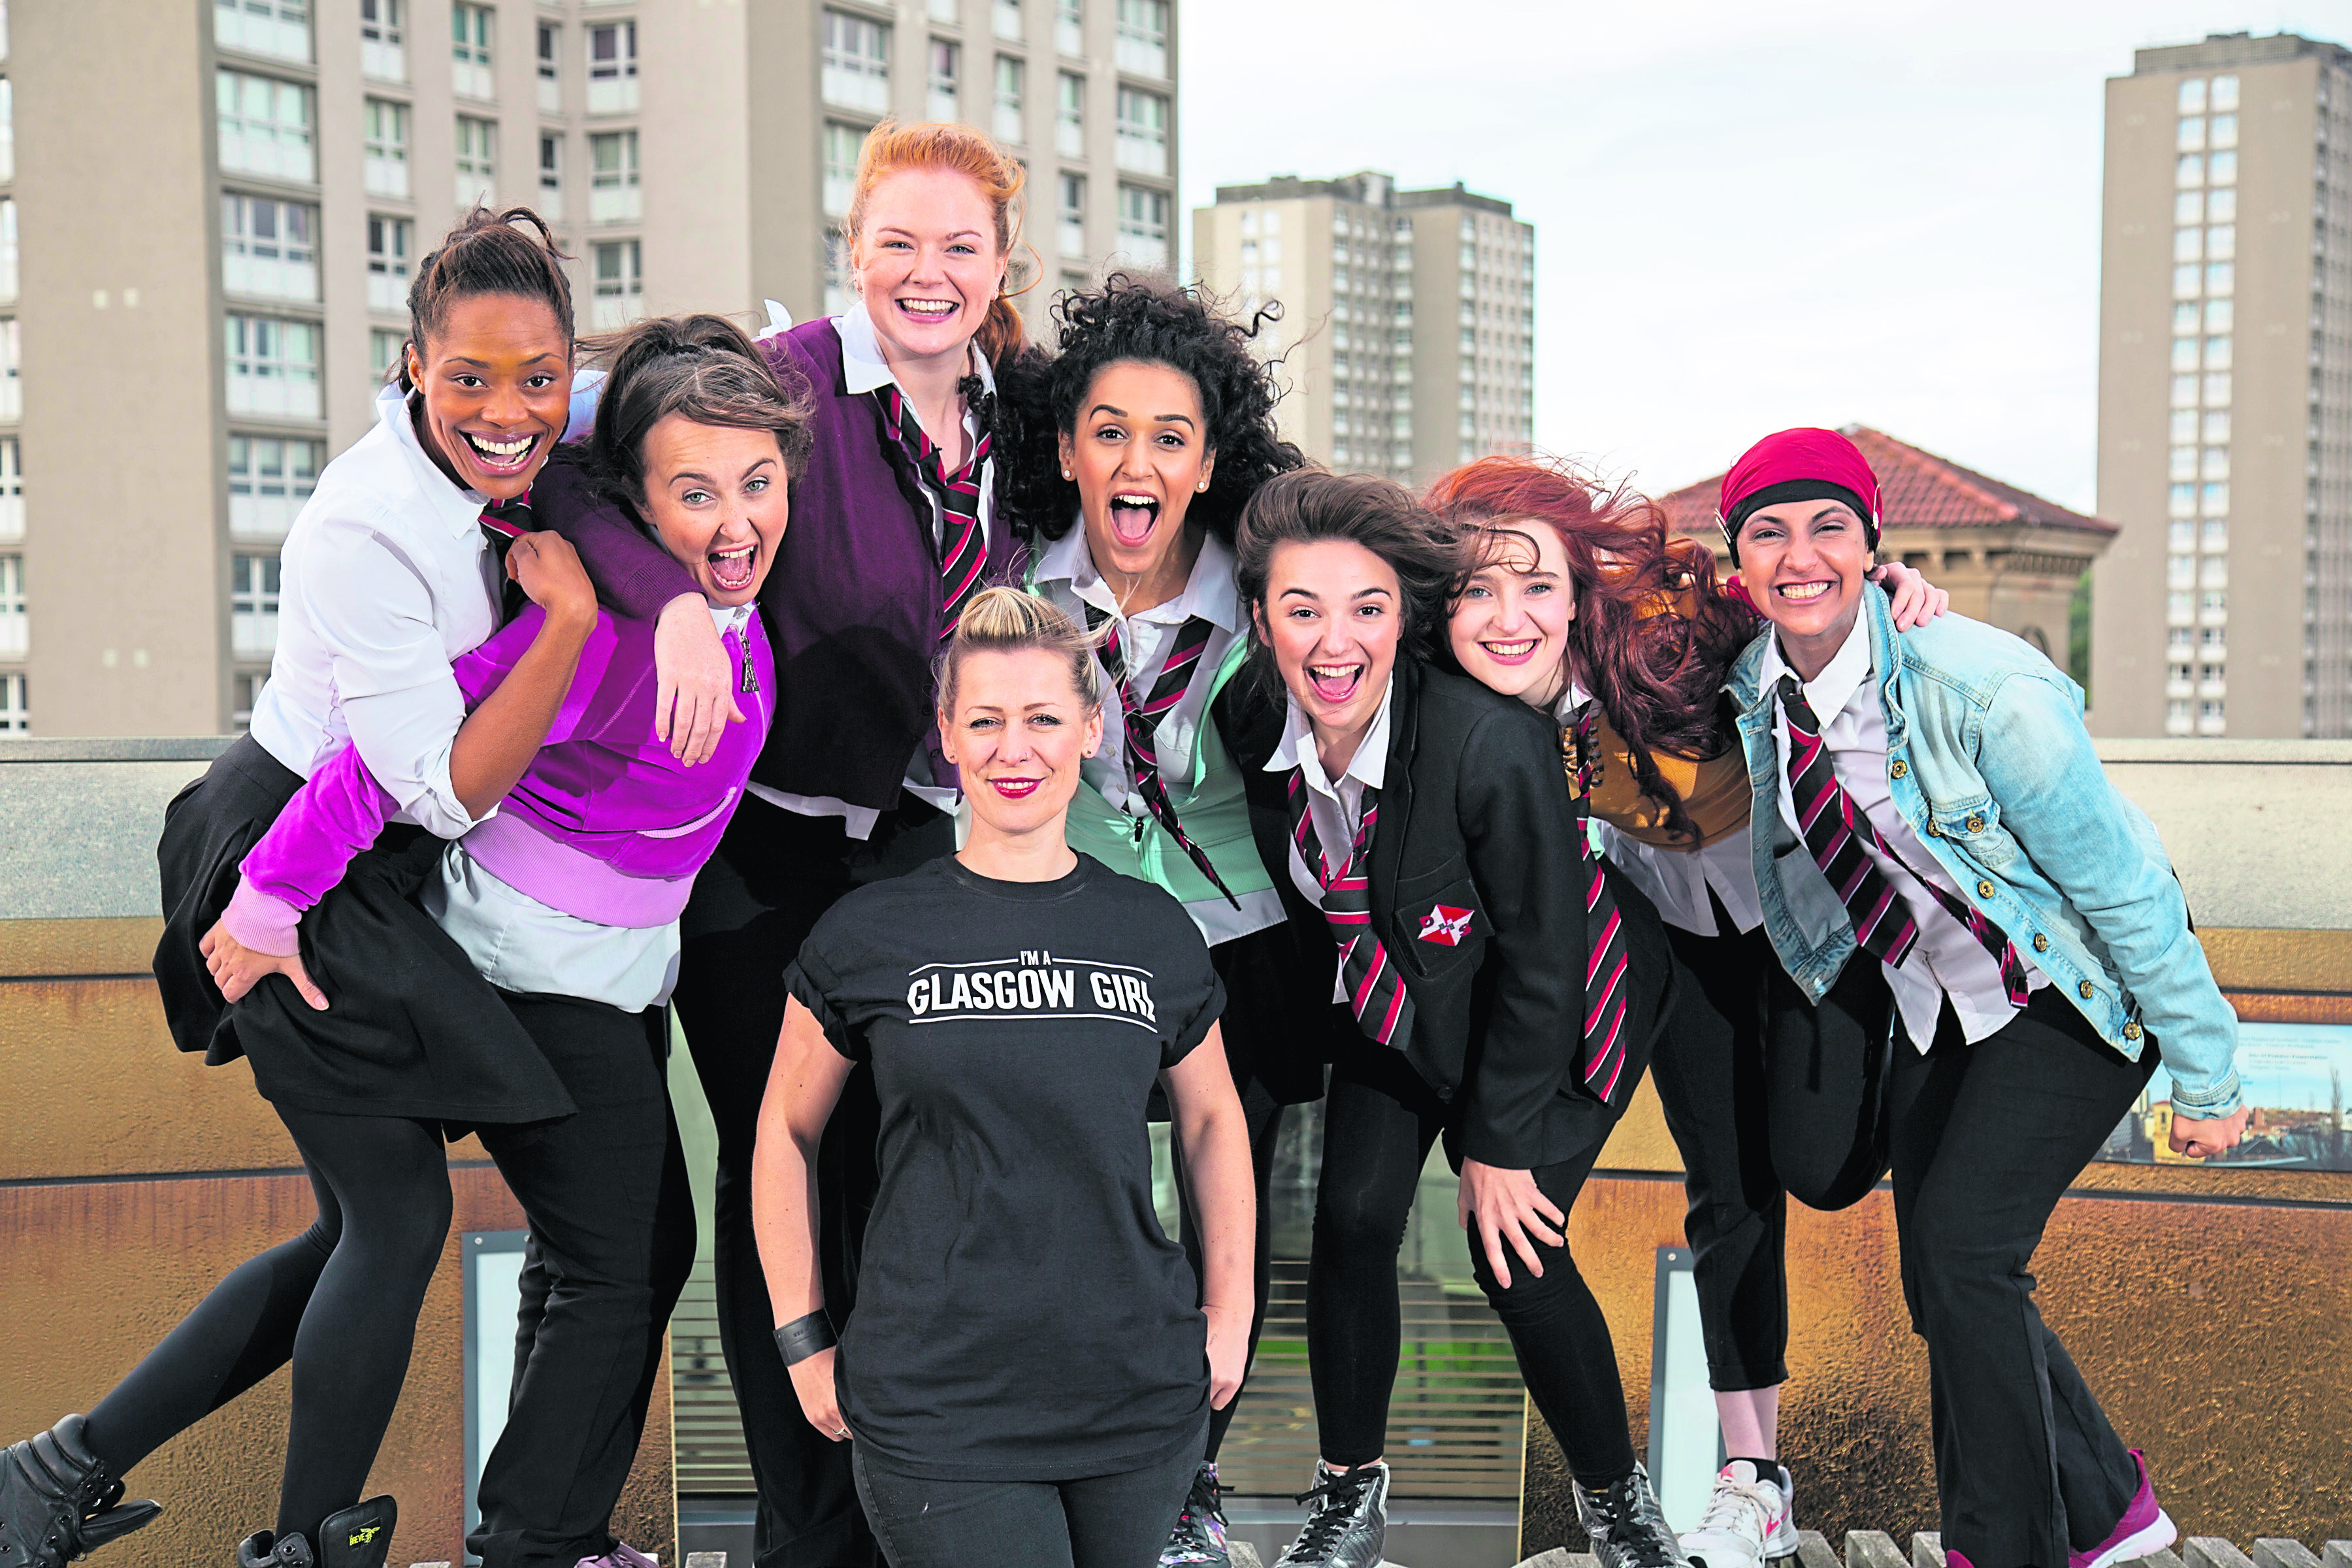 Glasgow Girls cast members, from left, Patricia Panther, Stephanie McGregor, Kara Swinney, Sophia Lewis, Chaira Sparks, Shannon Swan and Aryana Ramikhalawon.